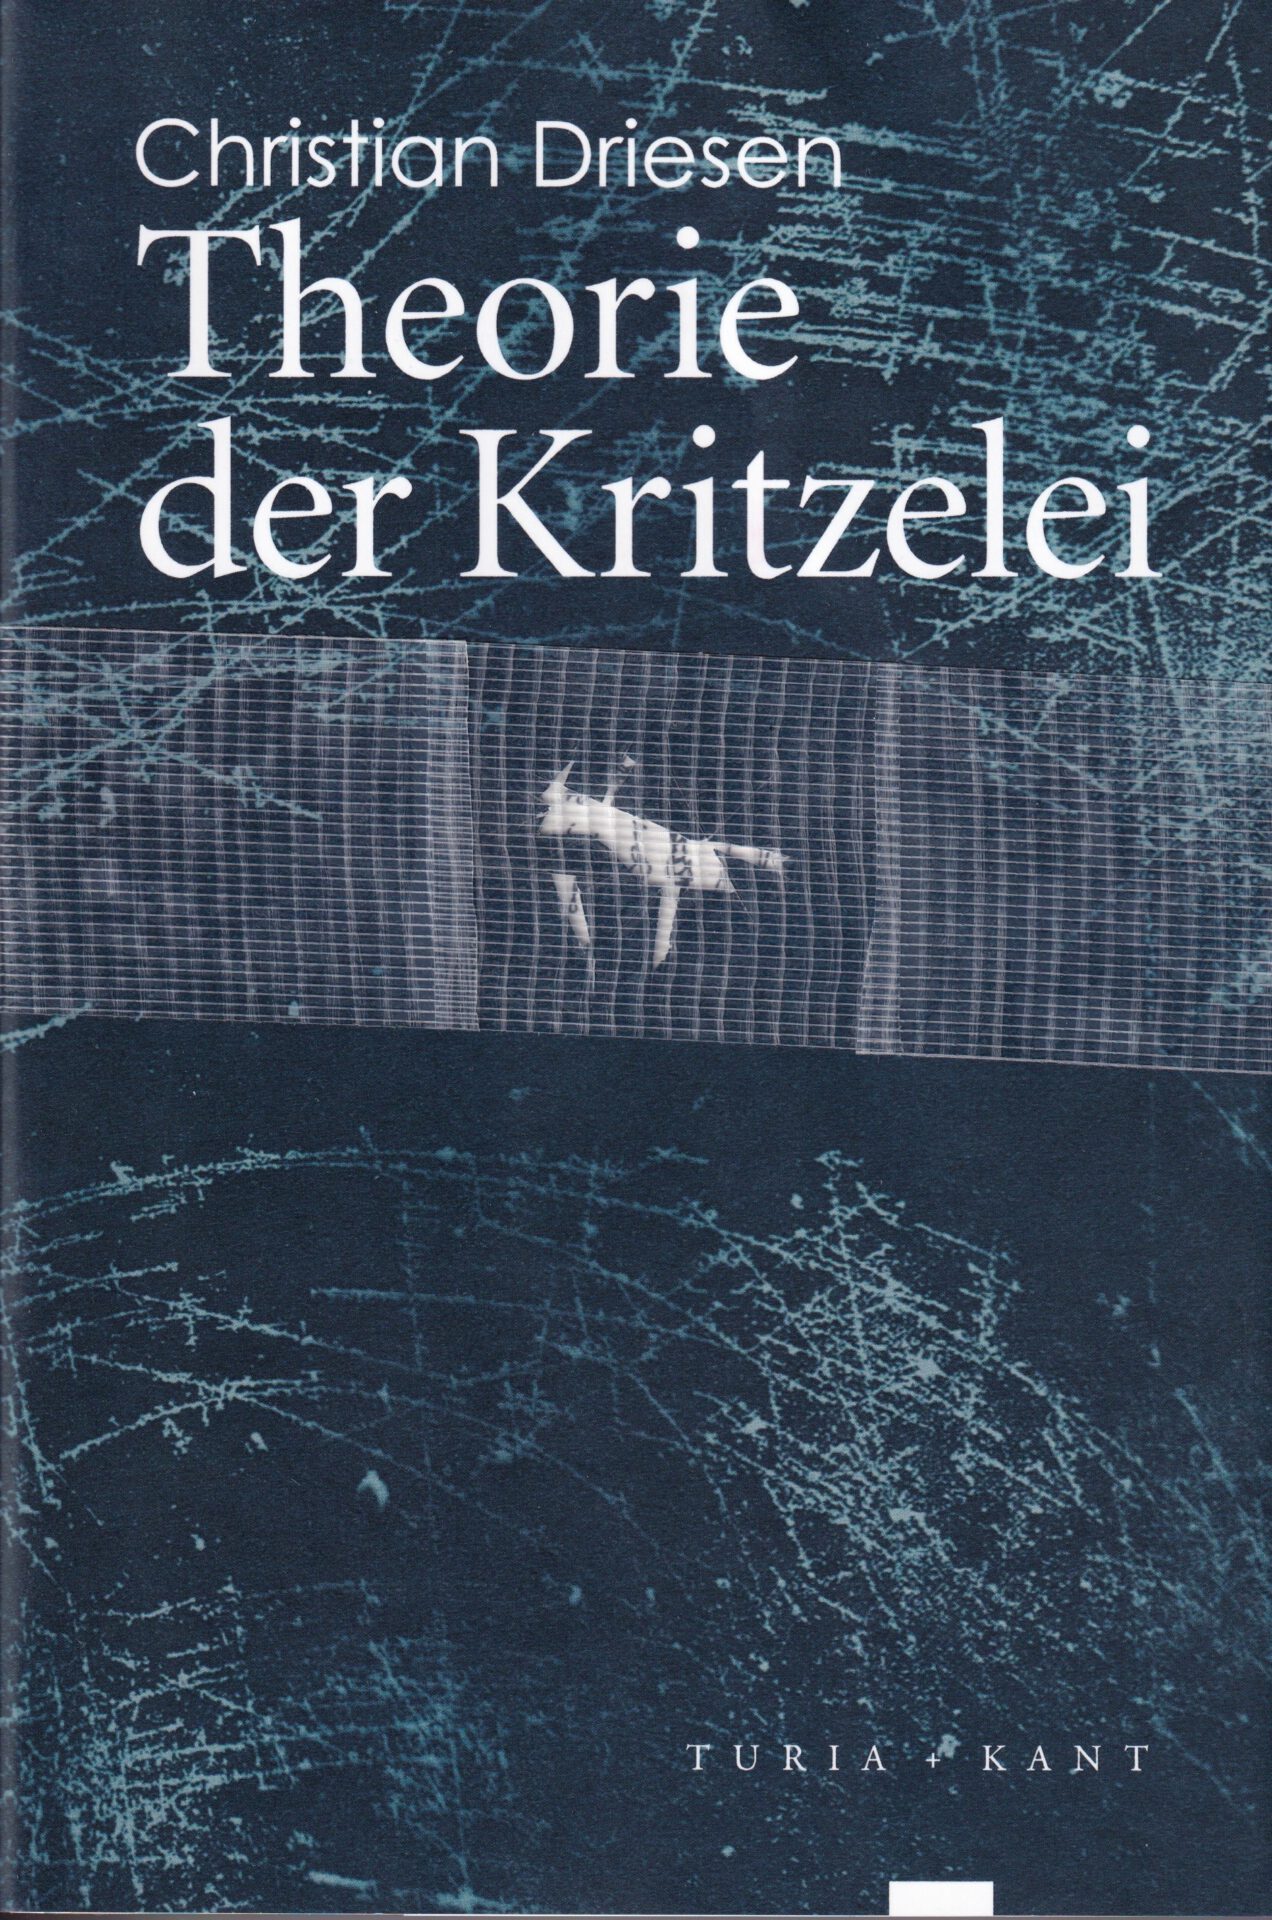 Processed book cover: Christian Driesen, Theorie der Kritzelei, Wien 2016 (CSMC, 702/2021)